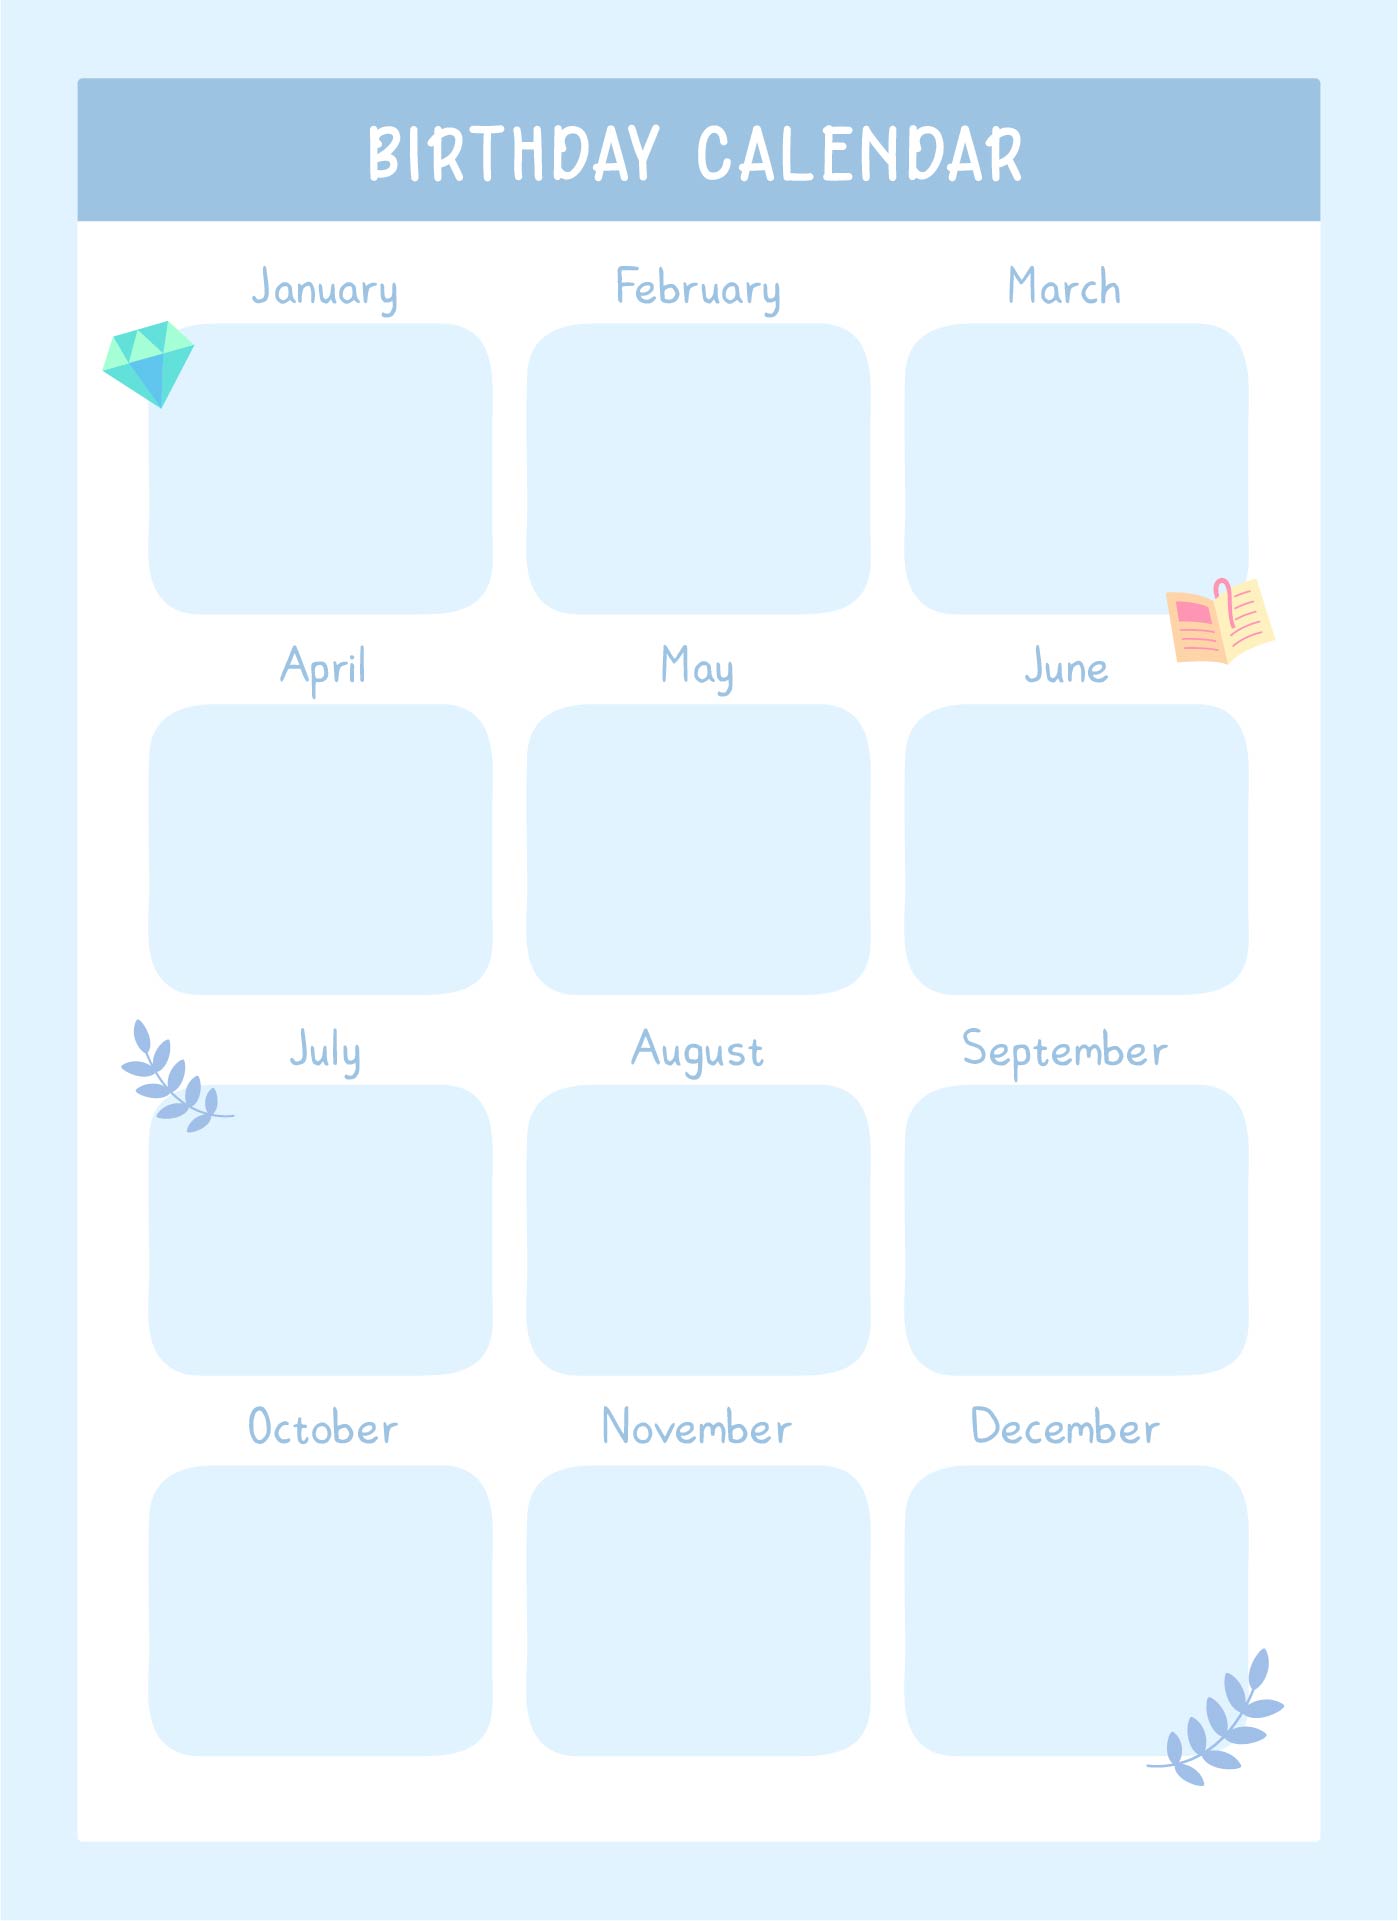 Birthday Calendar Templates 2015